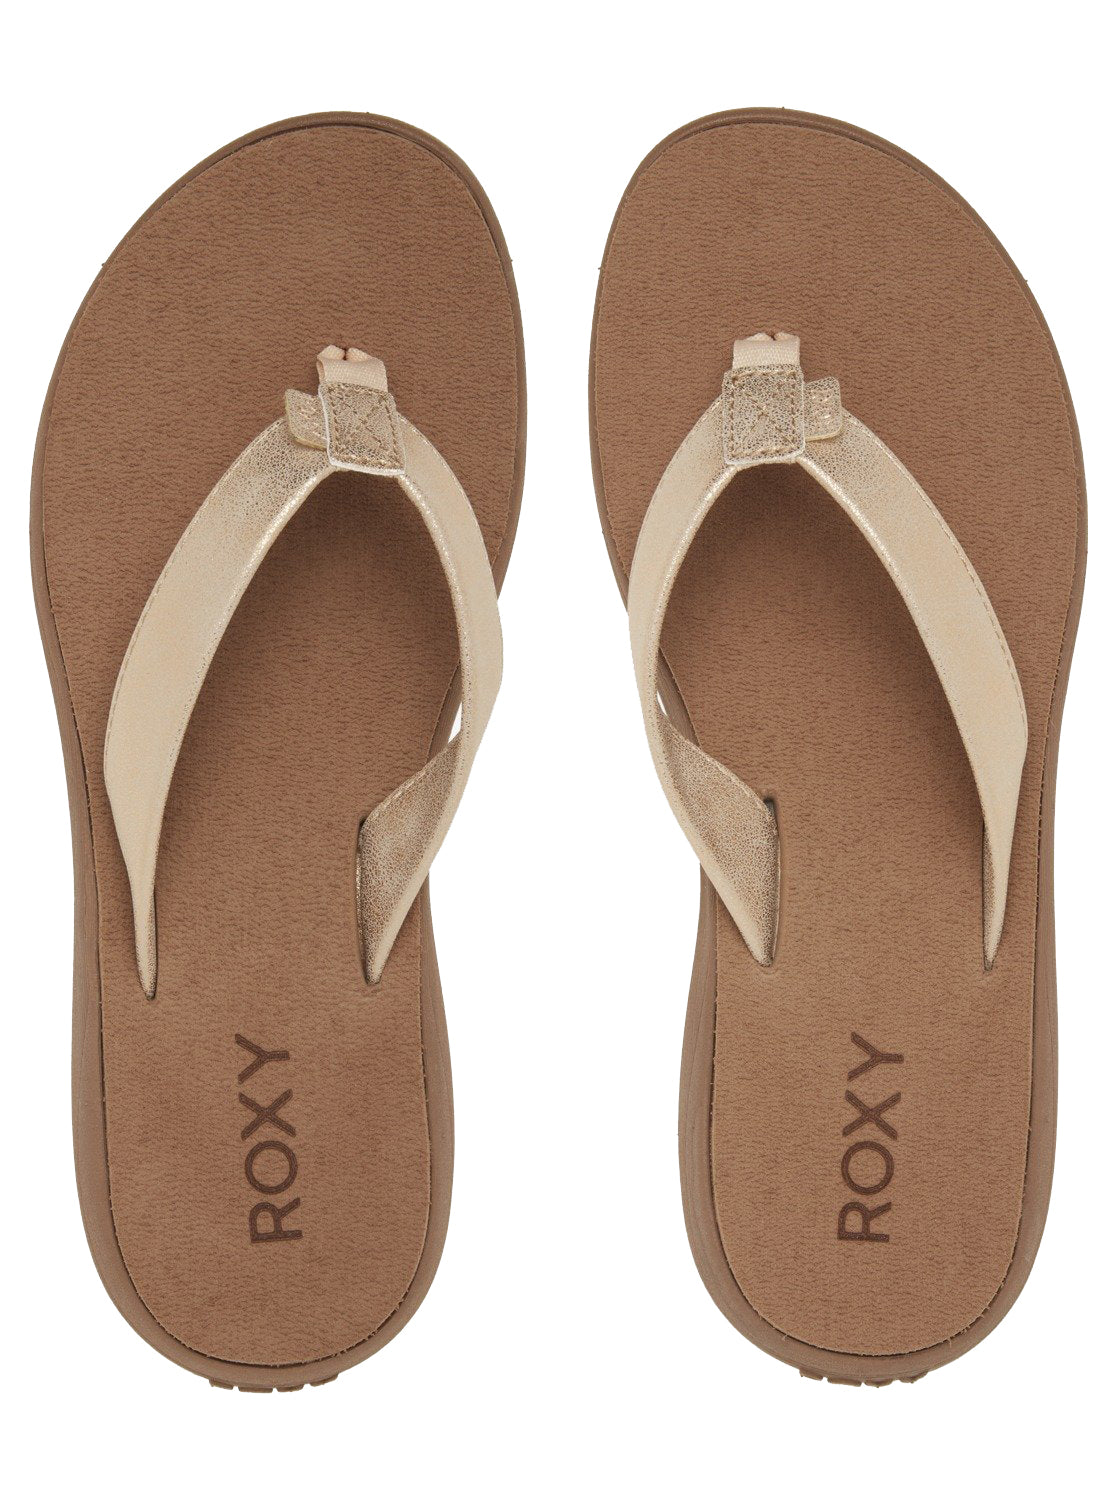 Roxy Lizzie Womens Sandal BRO-Bronze 8